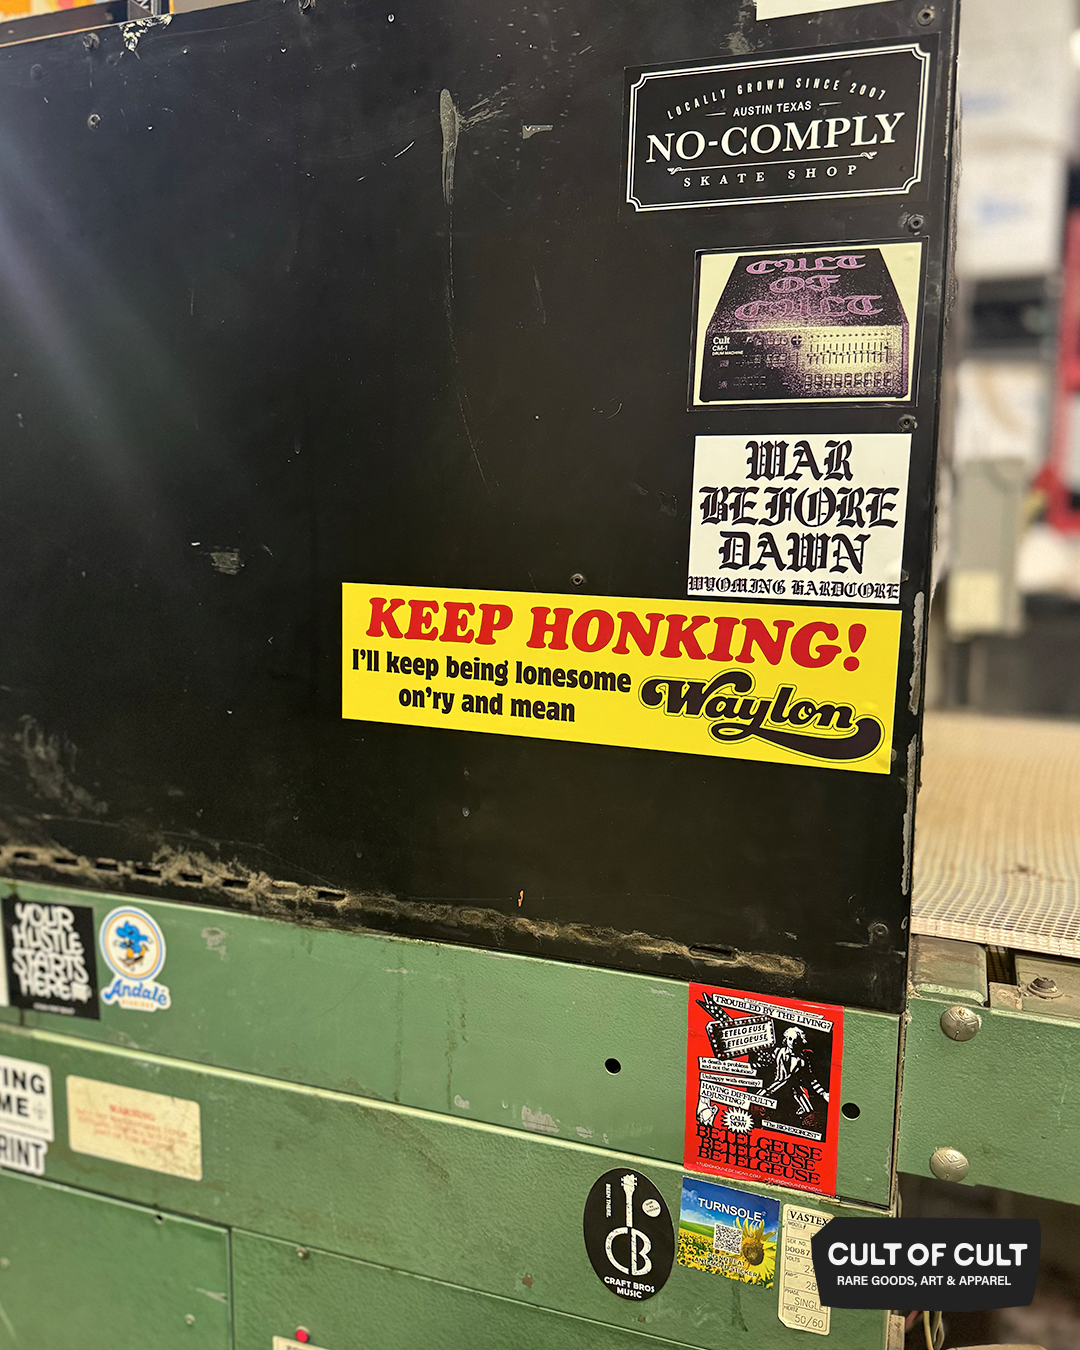 The Keep Honking Waylon Jennings bumper sticker on a shirt dryer around other stickers